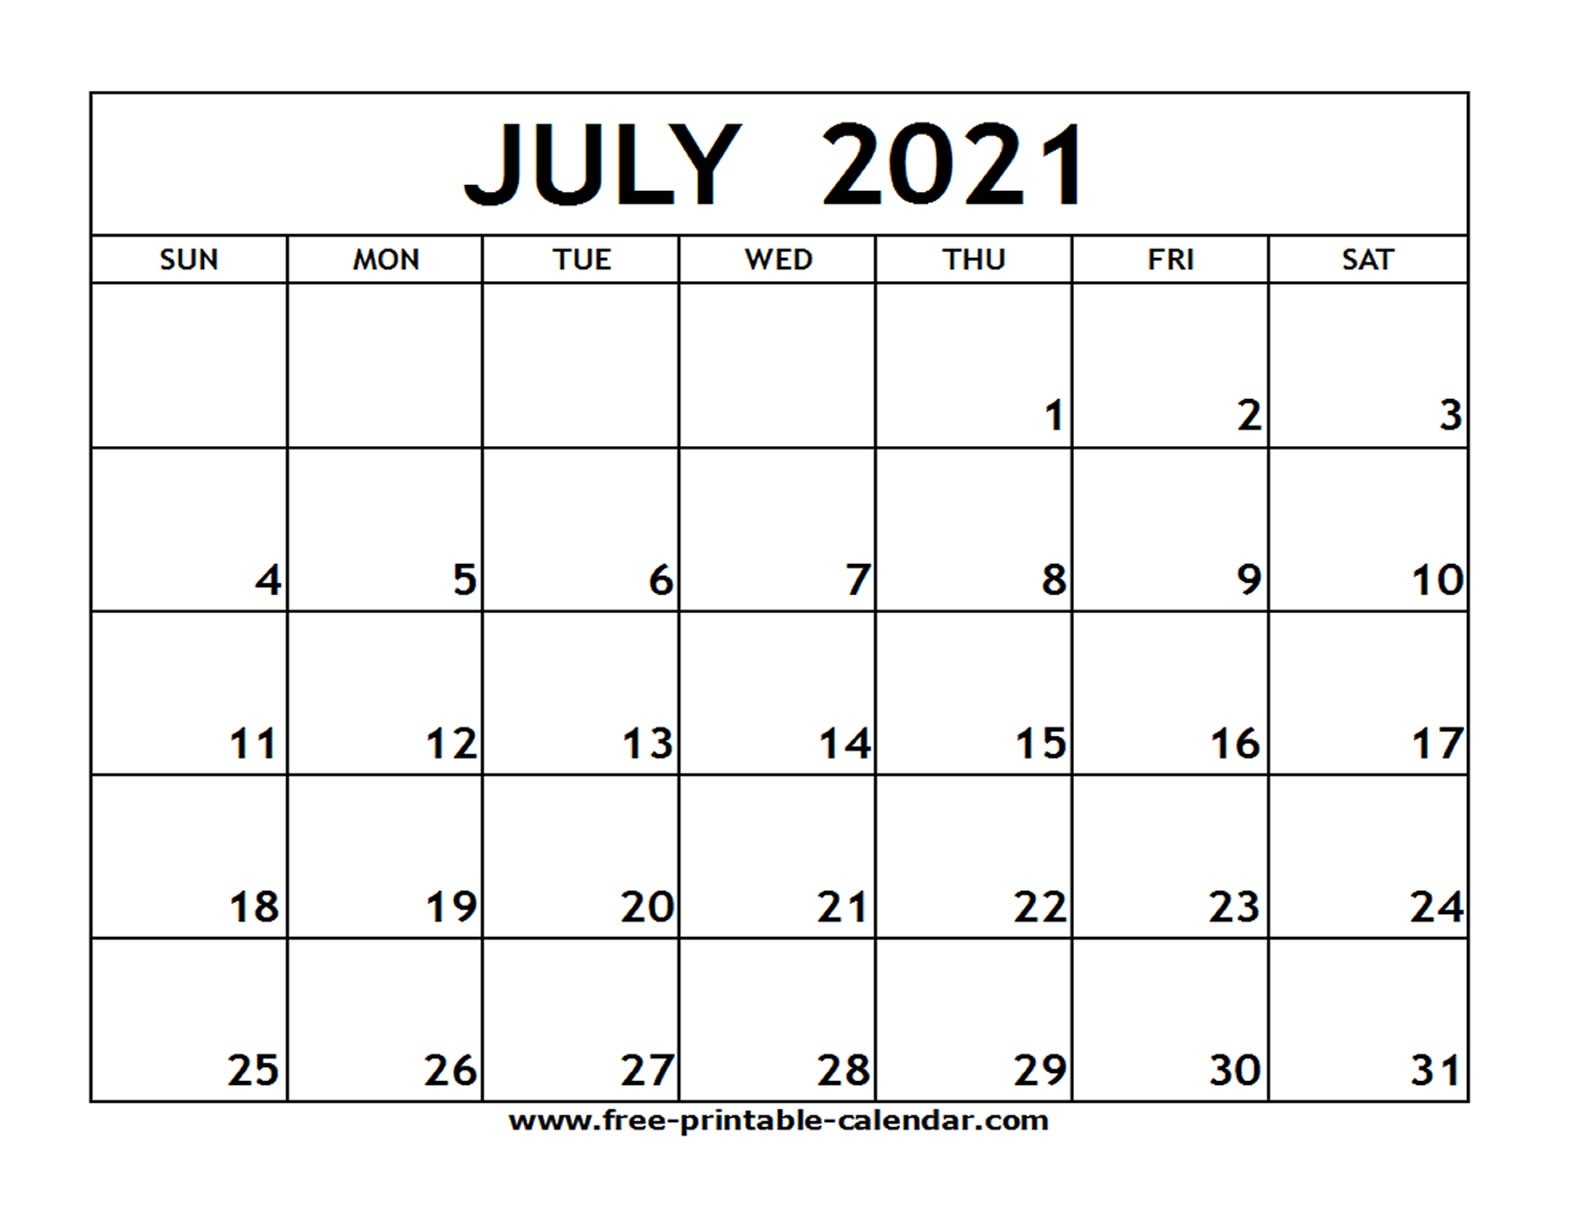 July 2021 Printable Calendar - Free-Printable-Calendar-Calendar I Can Edit June 2021